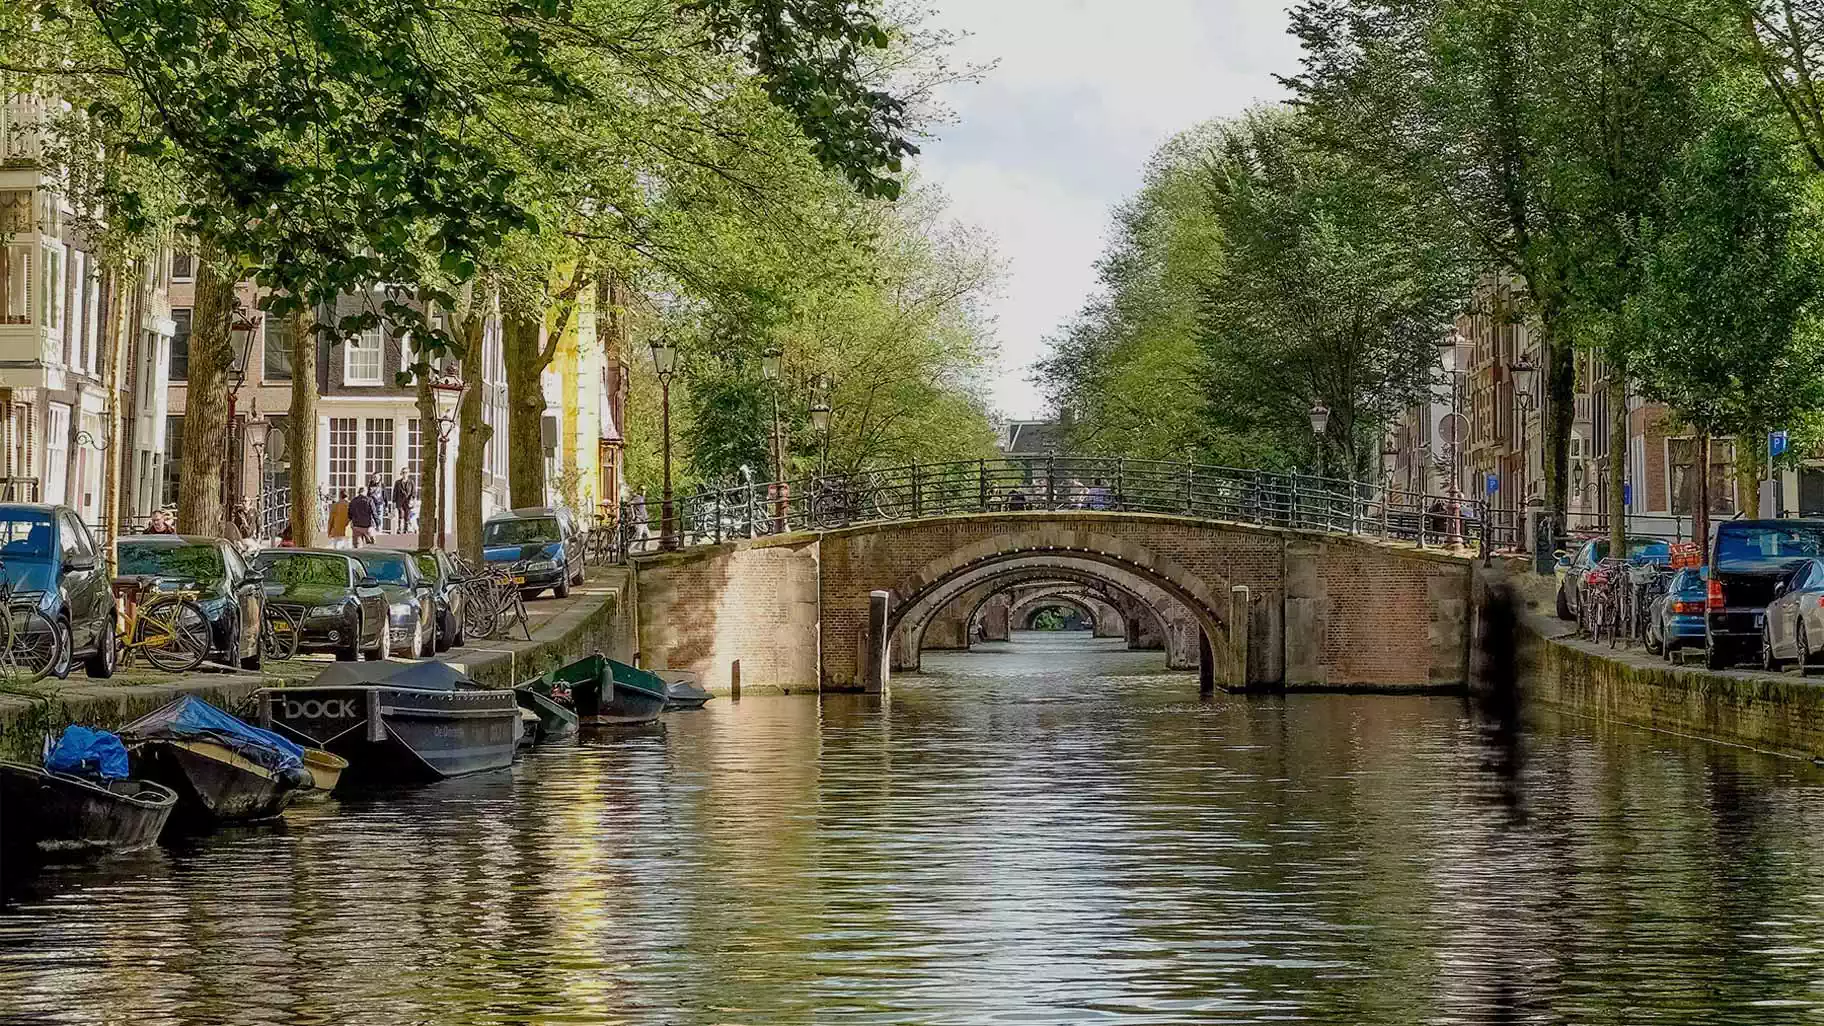 Reguliersgracht, seven bridges, Amsterdam